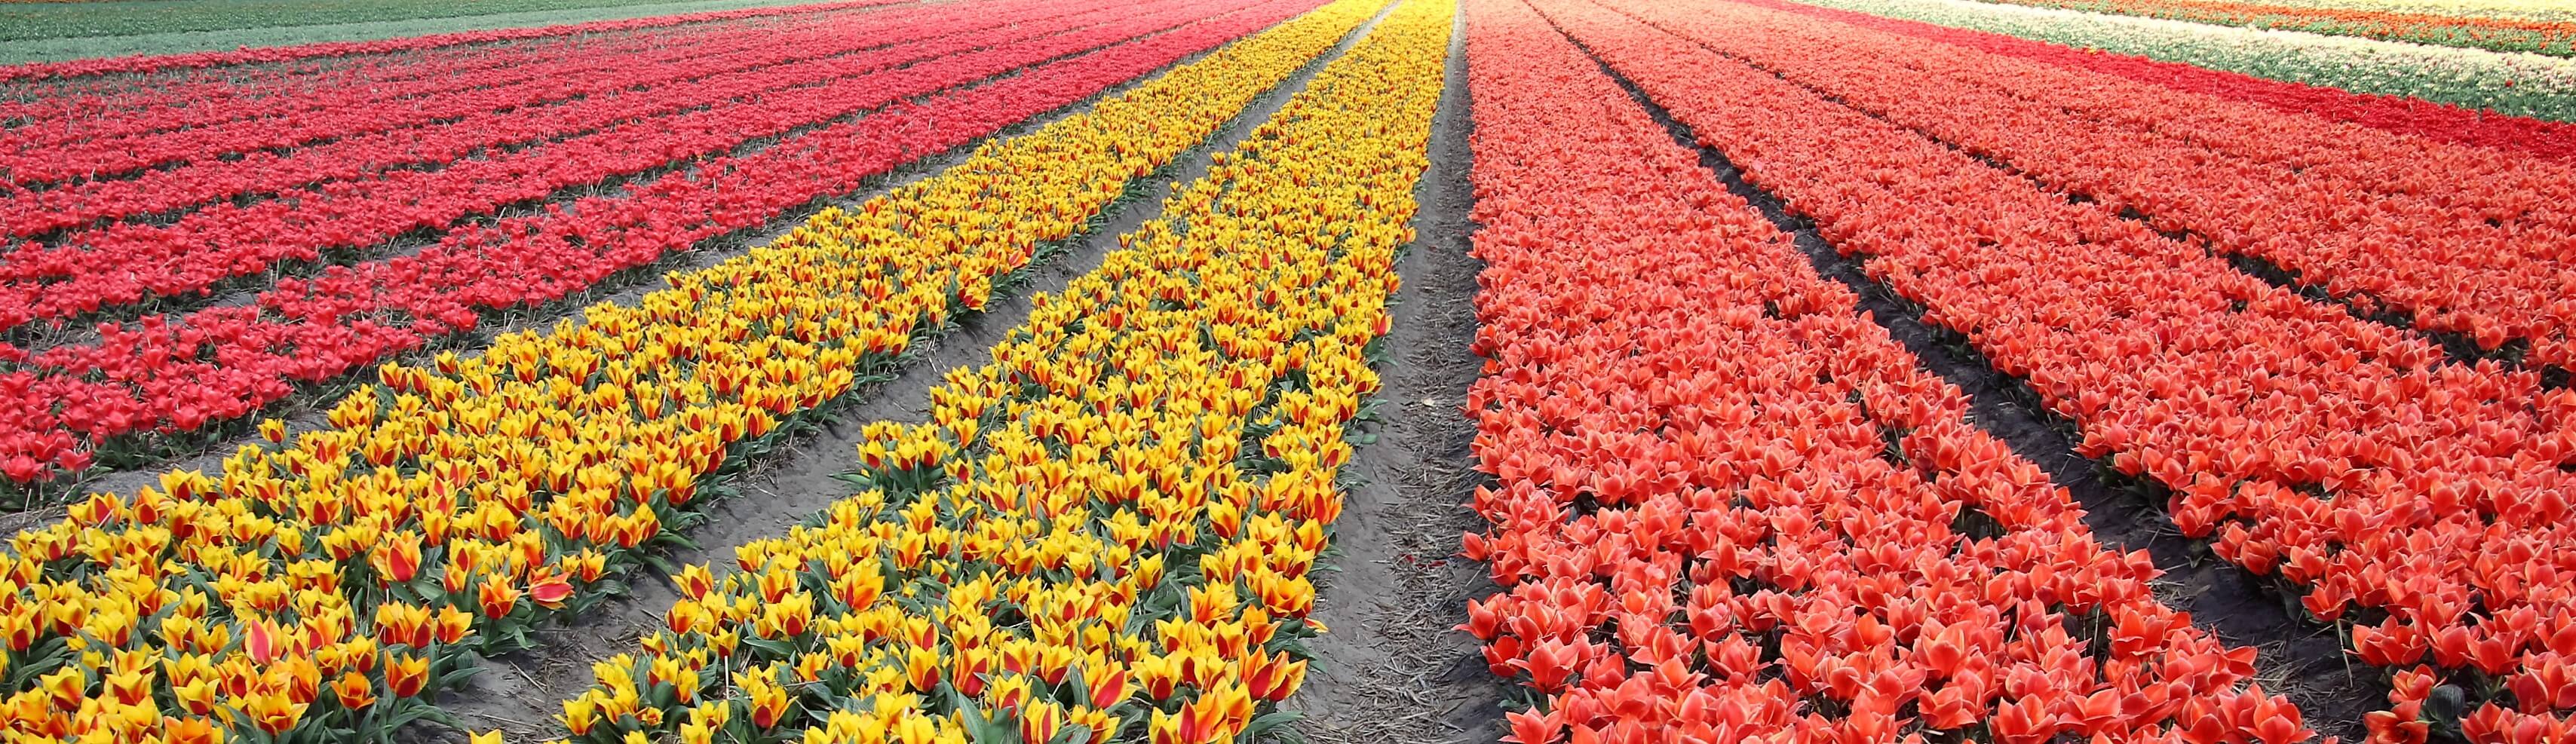 History of Dutch tulips